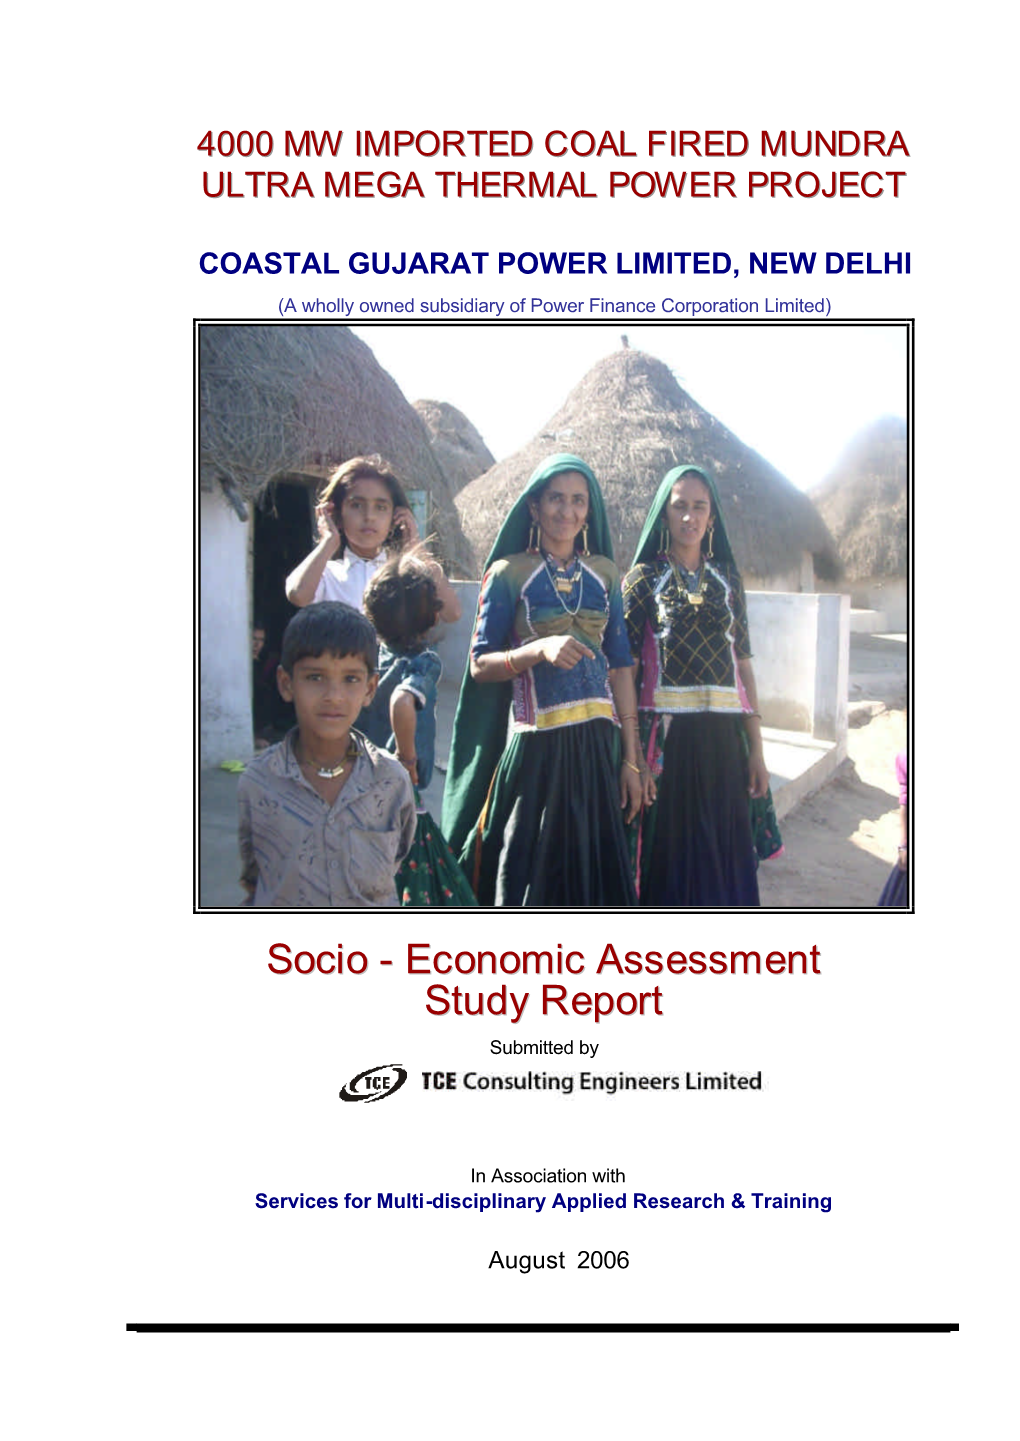 Socio - Economic Assessment Study Report